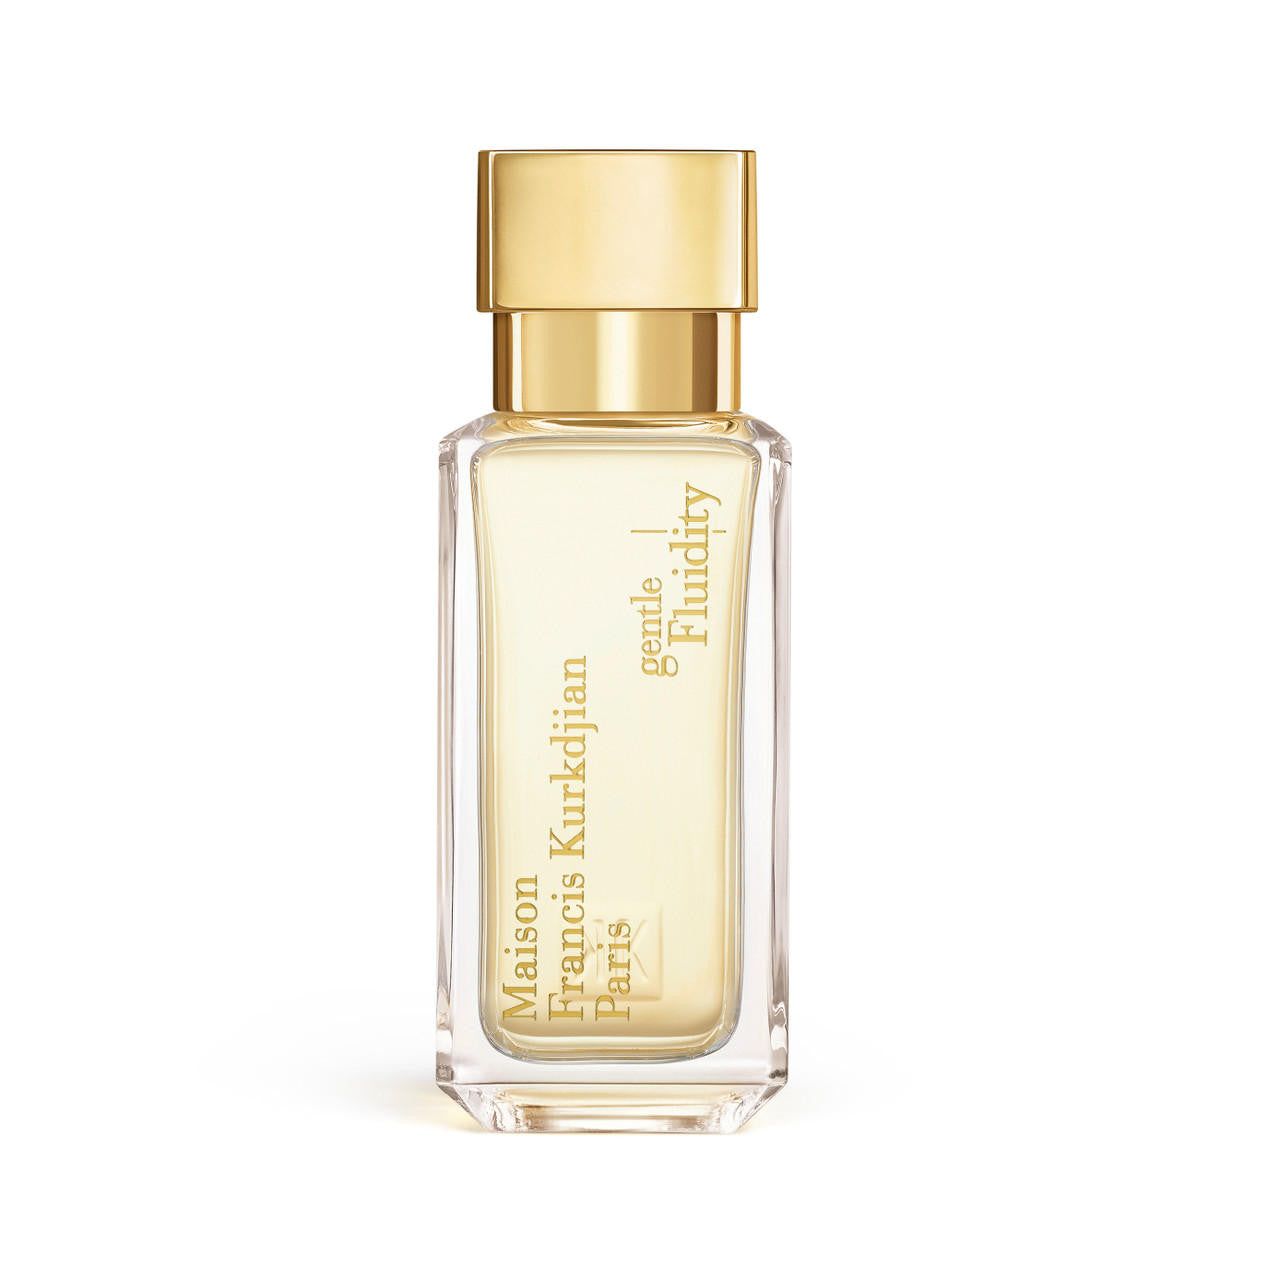  Maison Francis Kurkdjian Gentle Fluidity Gold Edition Eau de Parfum 35ml 